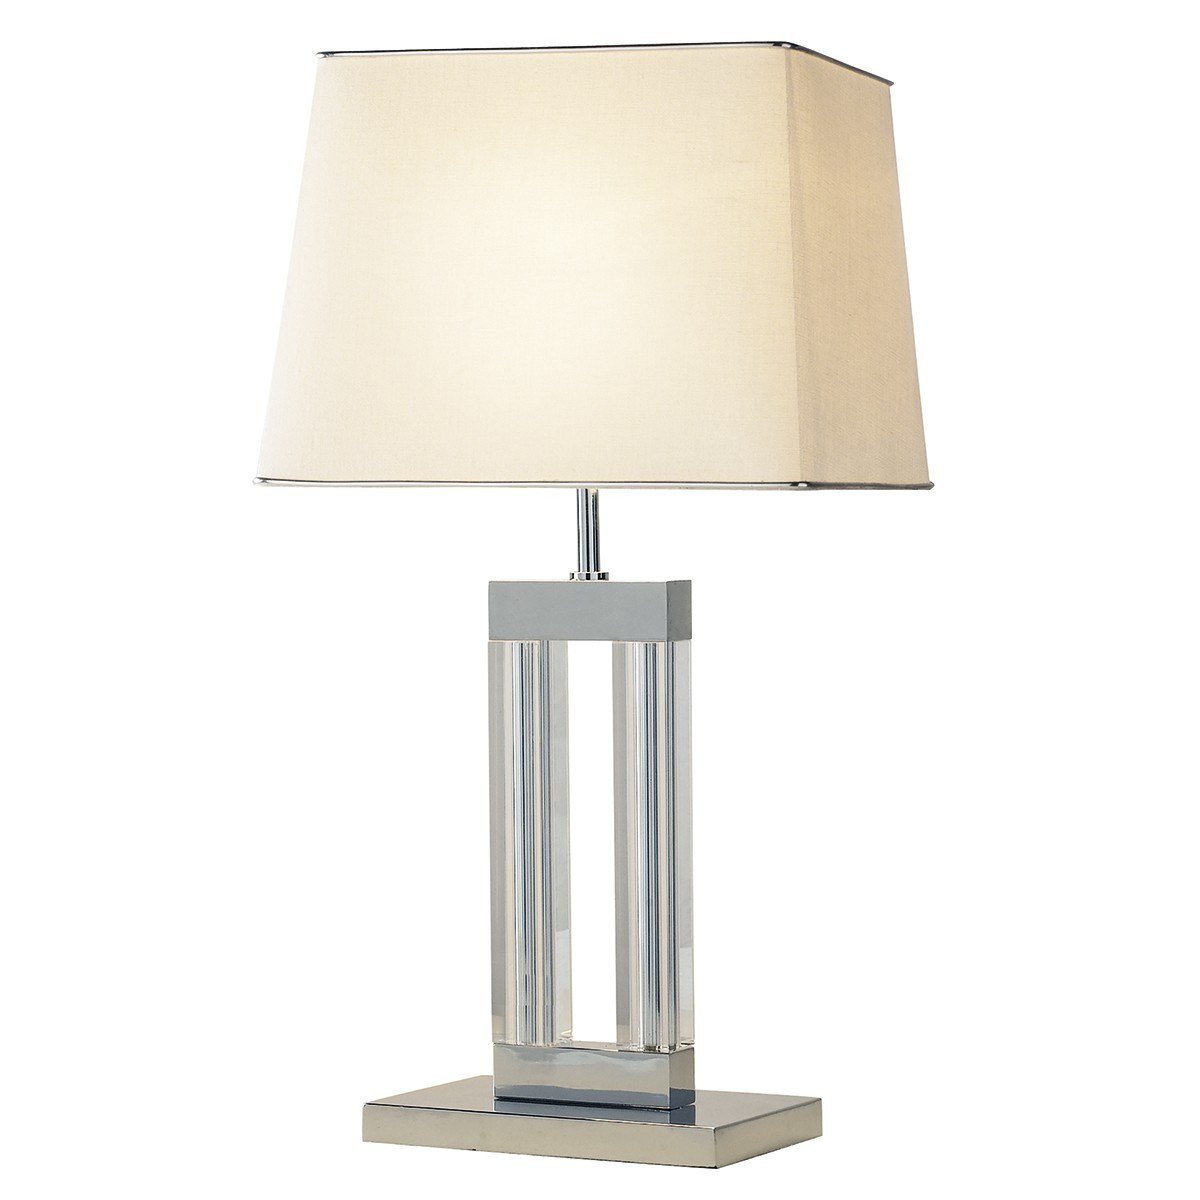 Domain Cream Table Lamp - London Lighting - 1